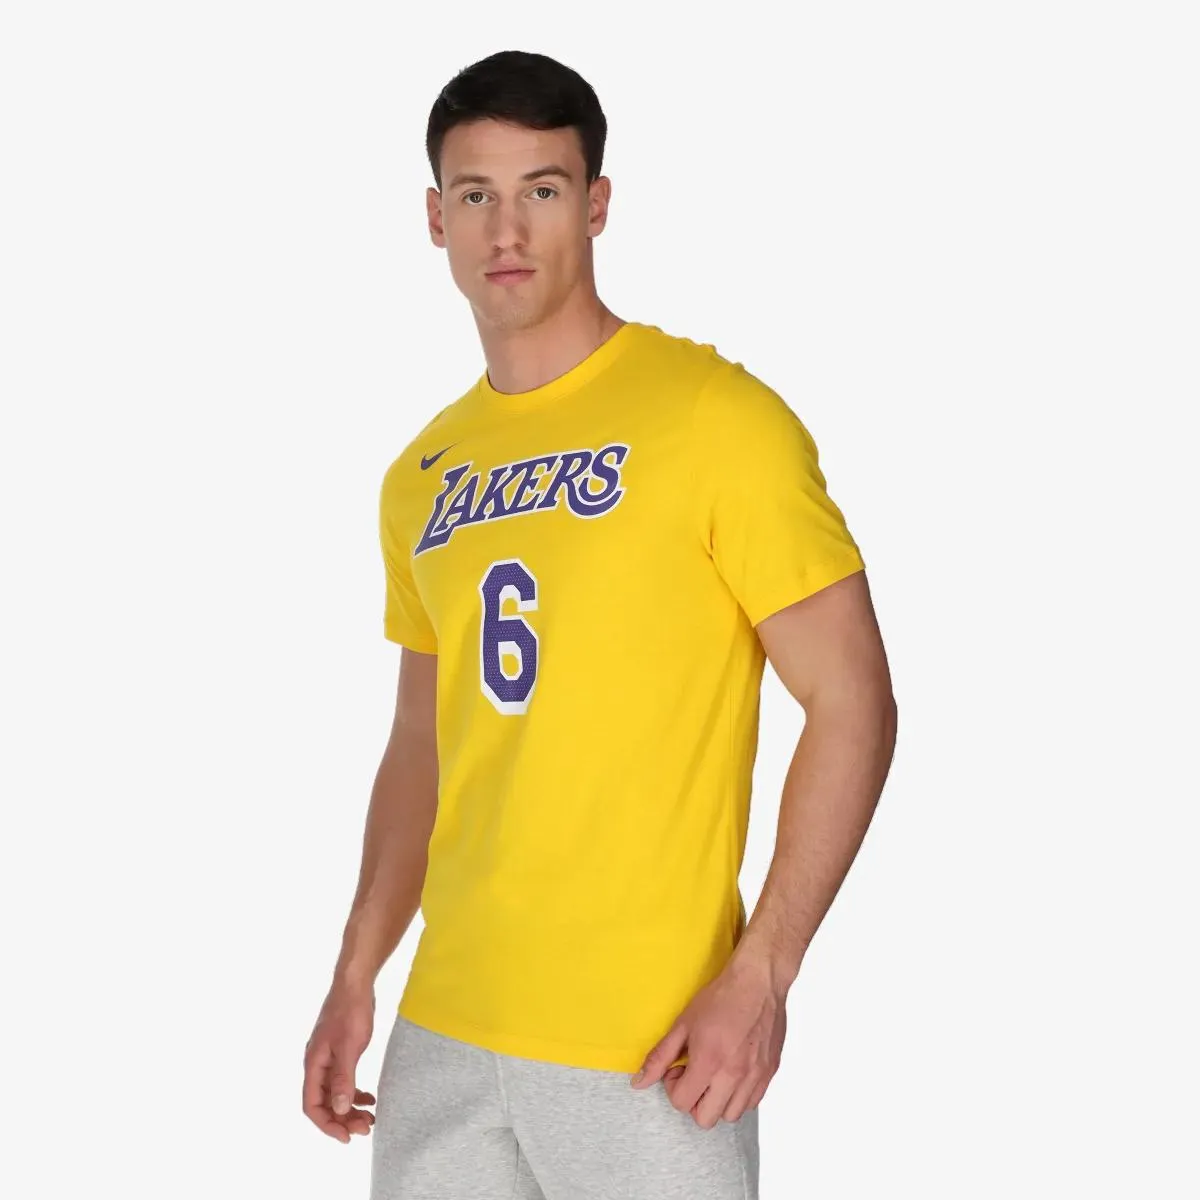 Nike T-shirt Los Angeles Lakers 